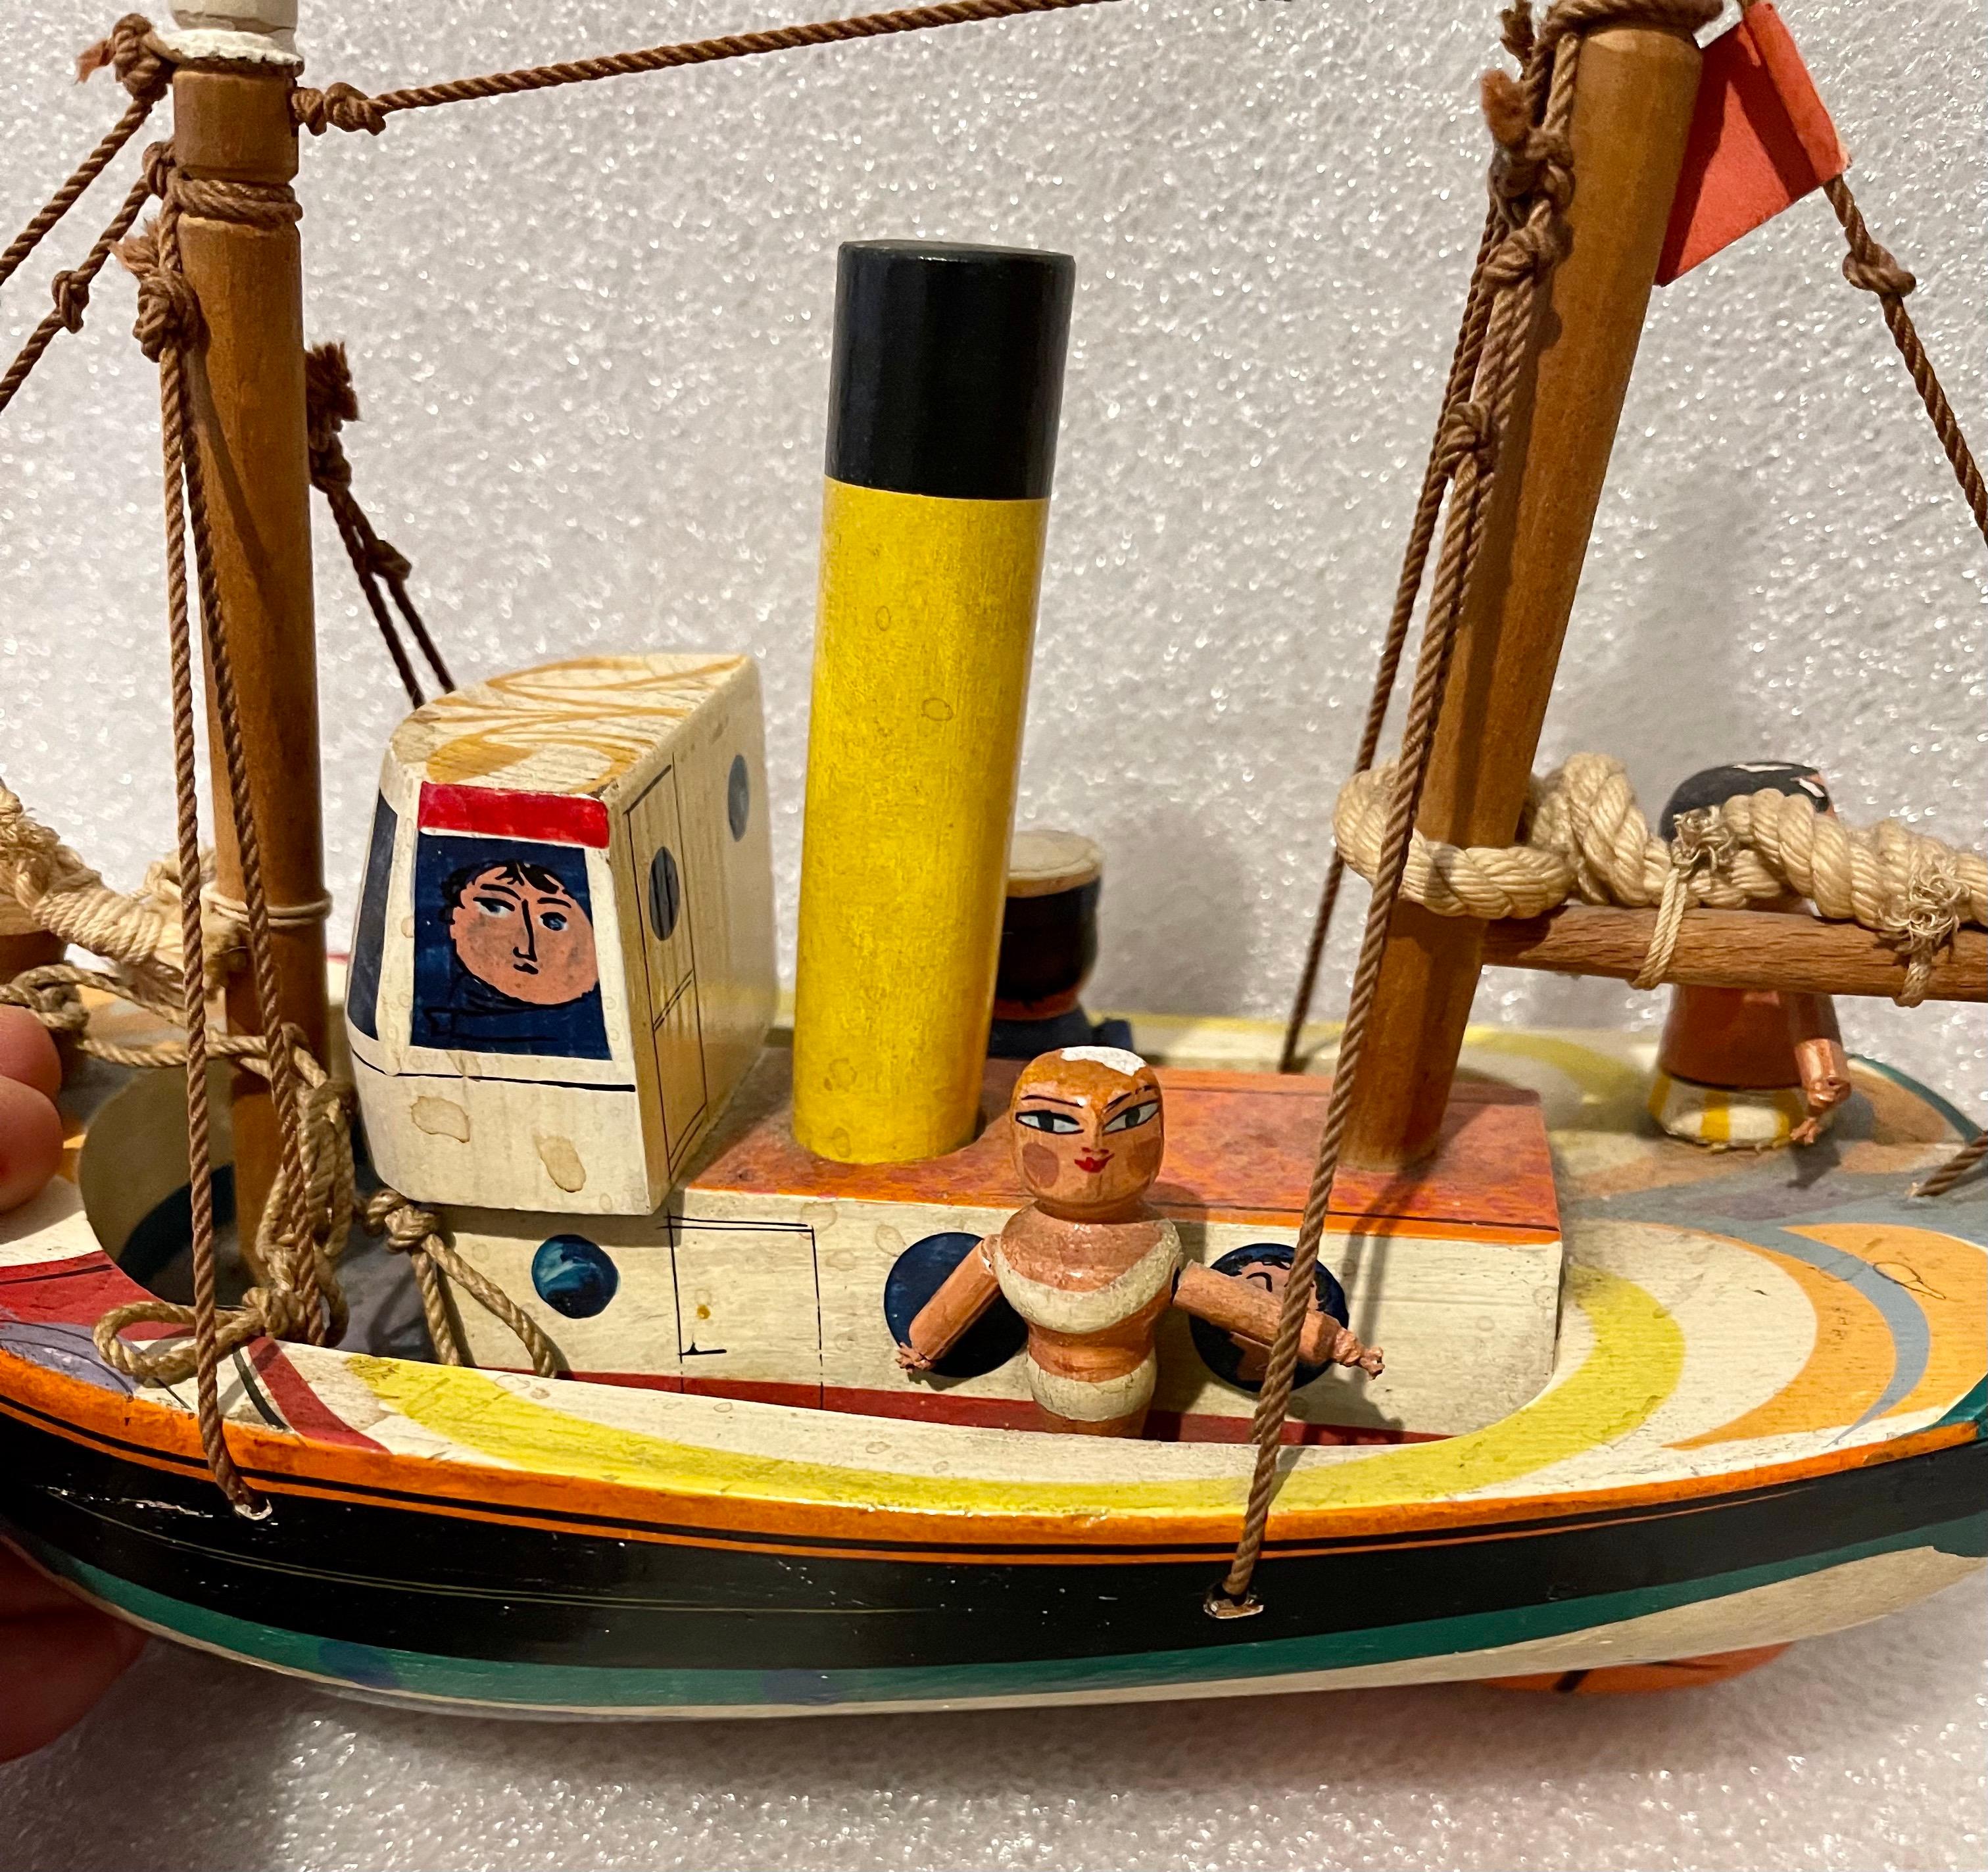 British Folk Art Whimsical Enamel Painted Carved Wood Model Ship Toy Sculpture 4